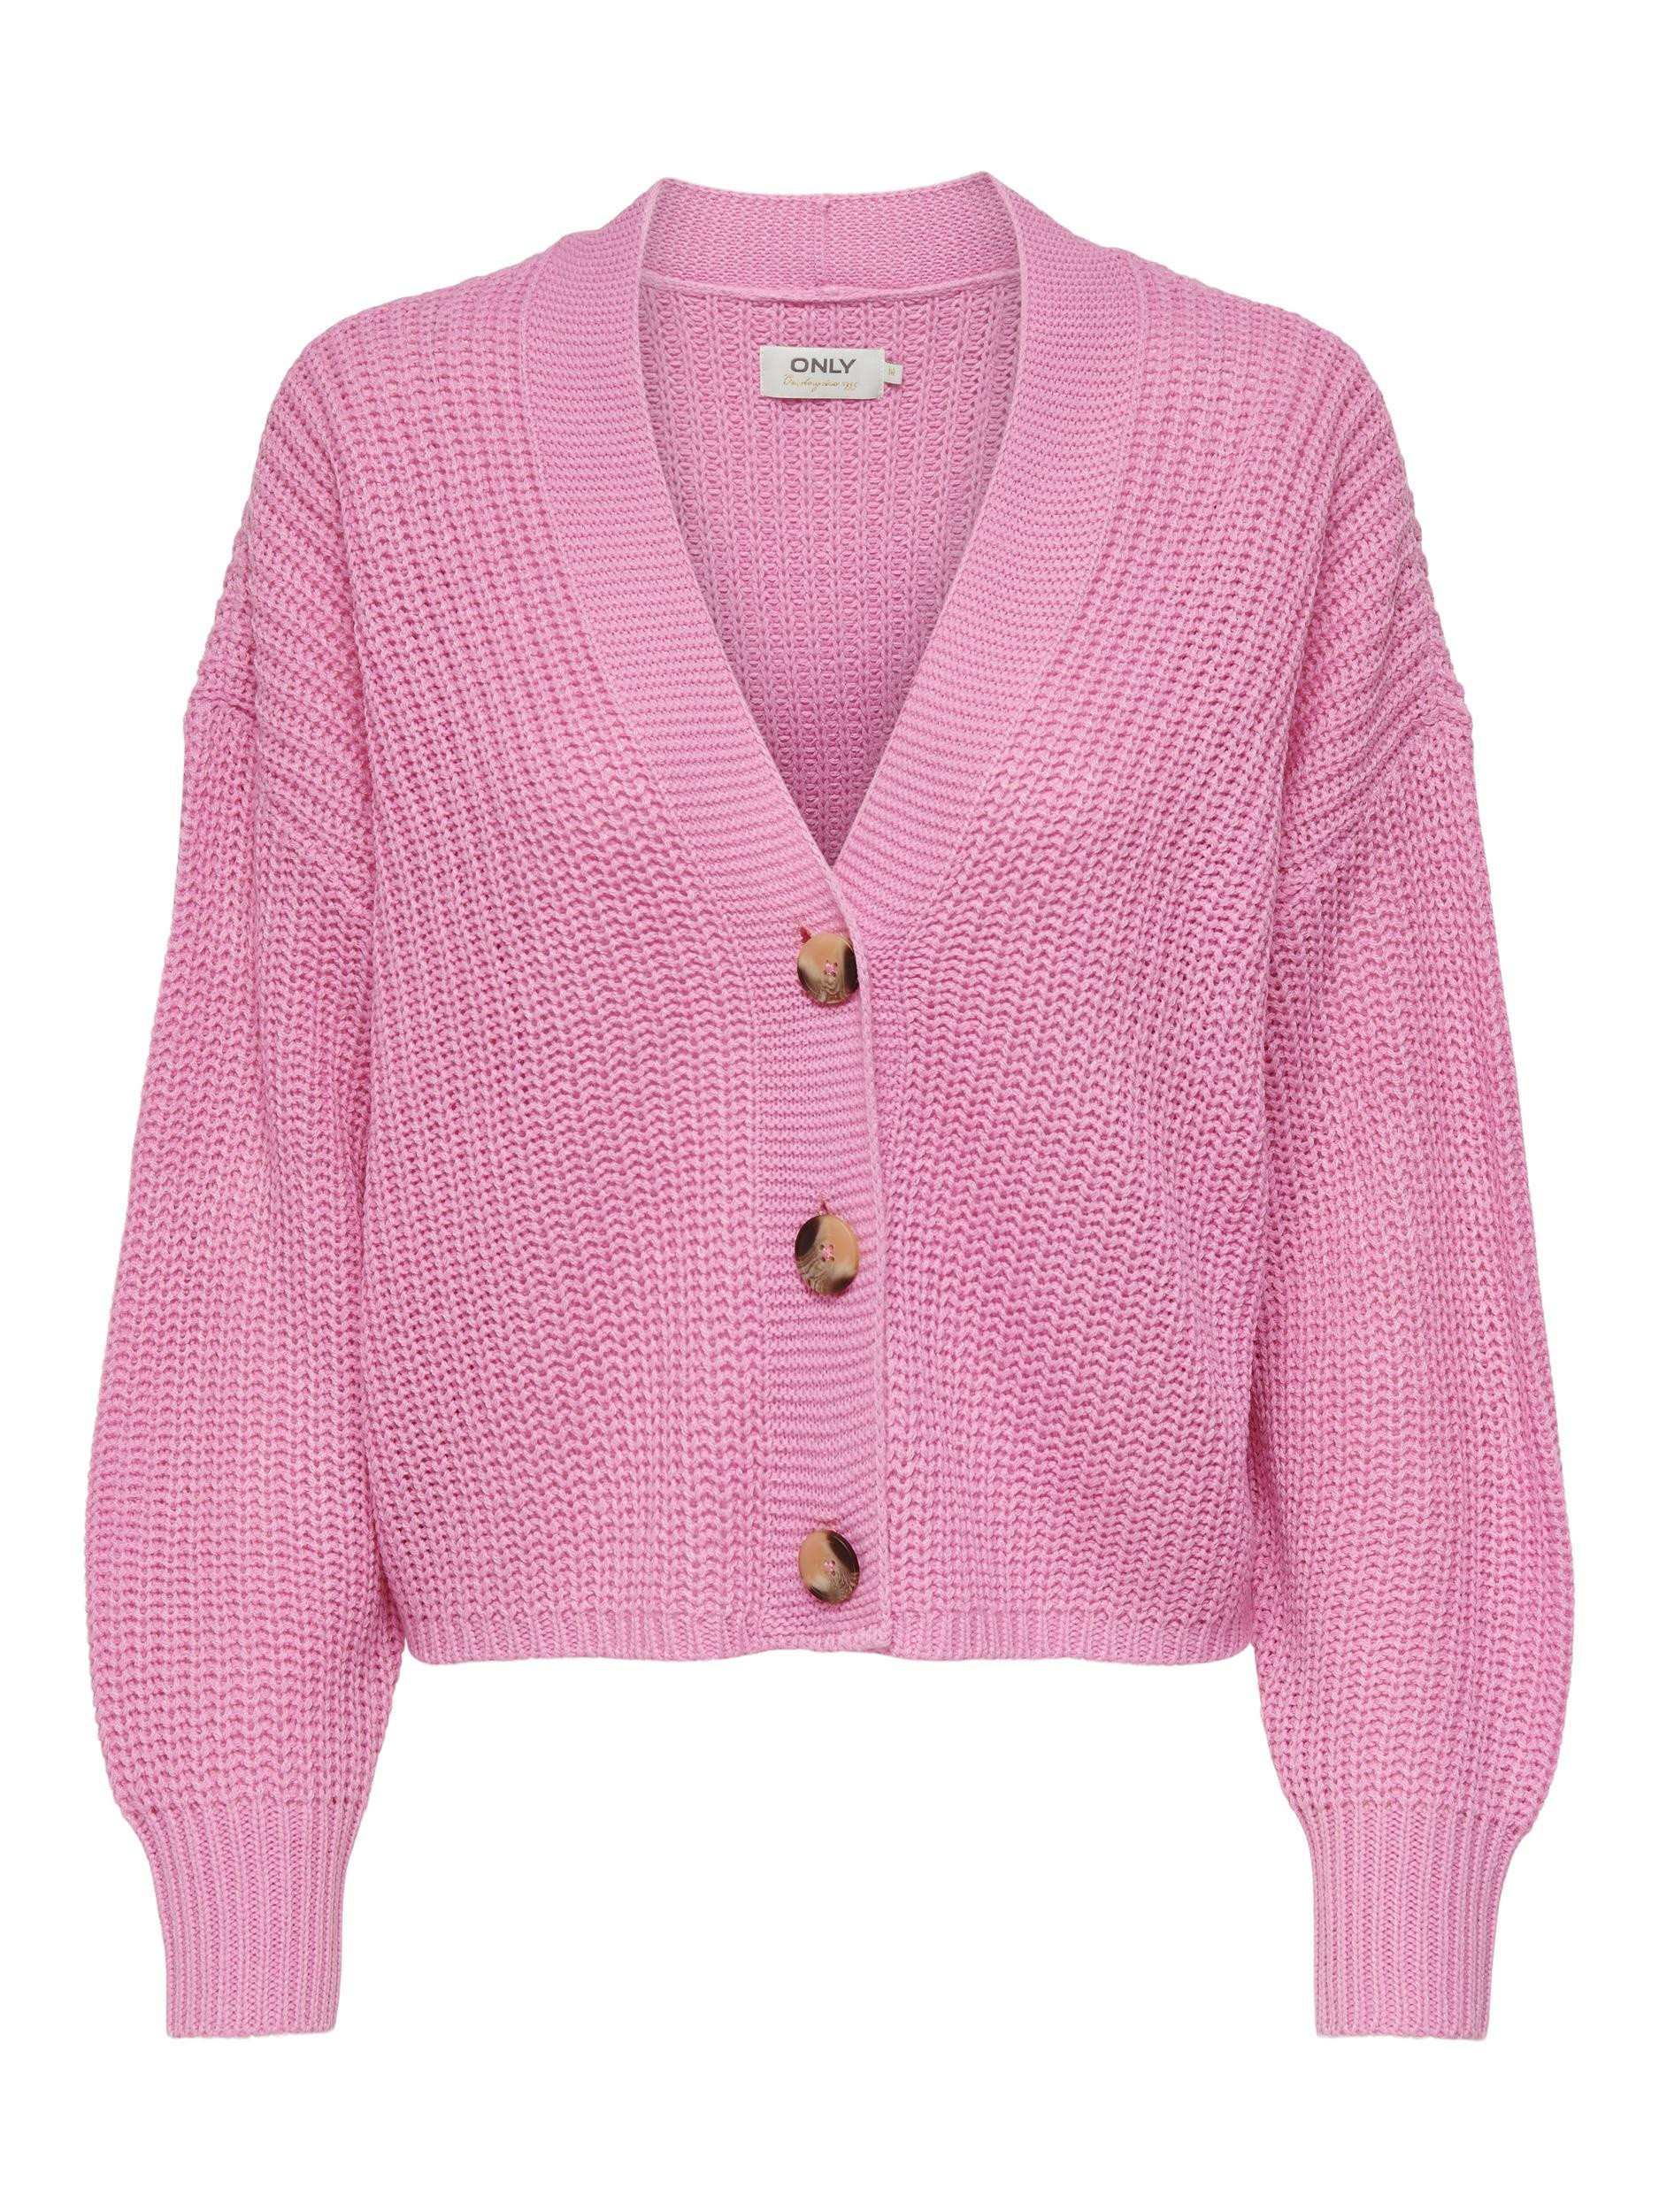 Only - Knit cardigan, Pink Flamingo, large image number 0